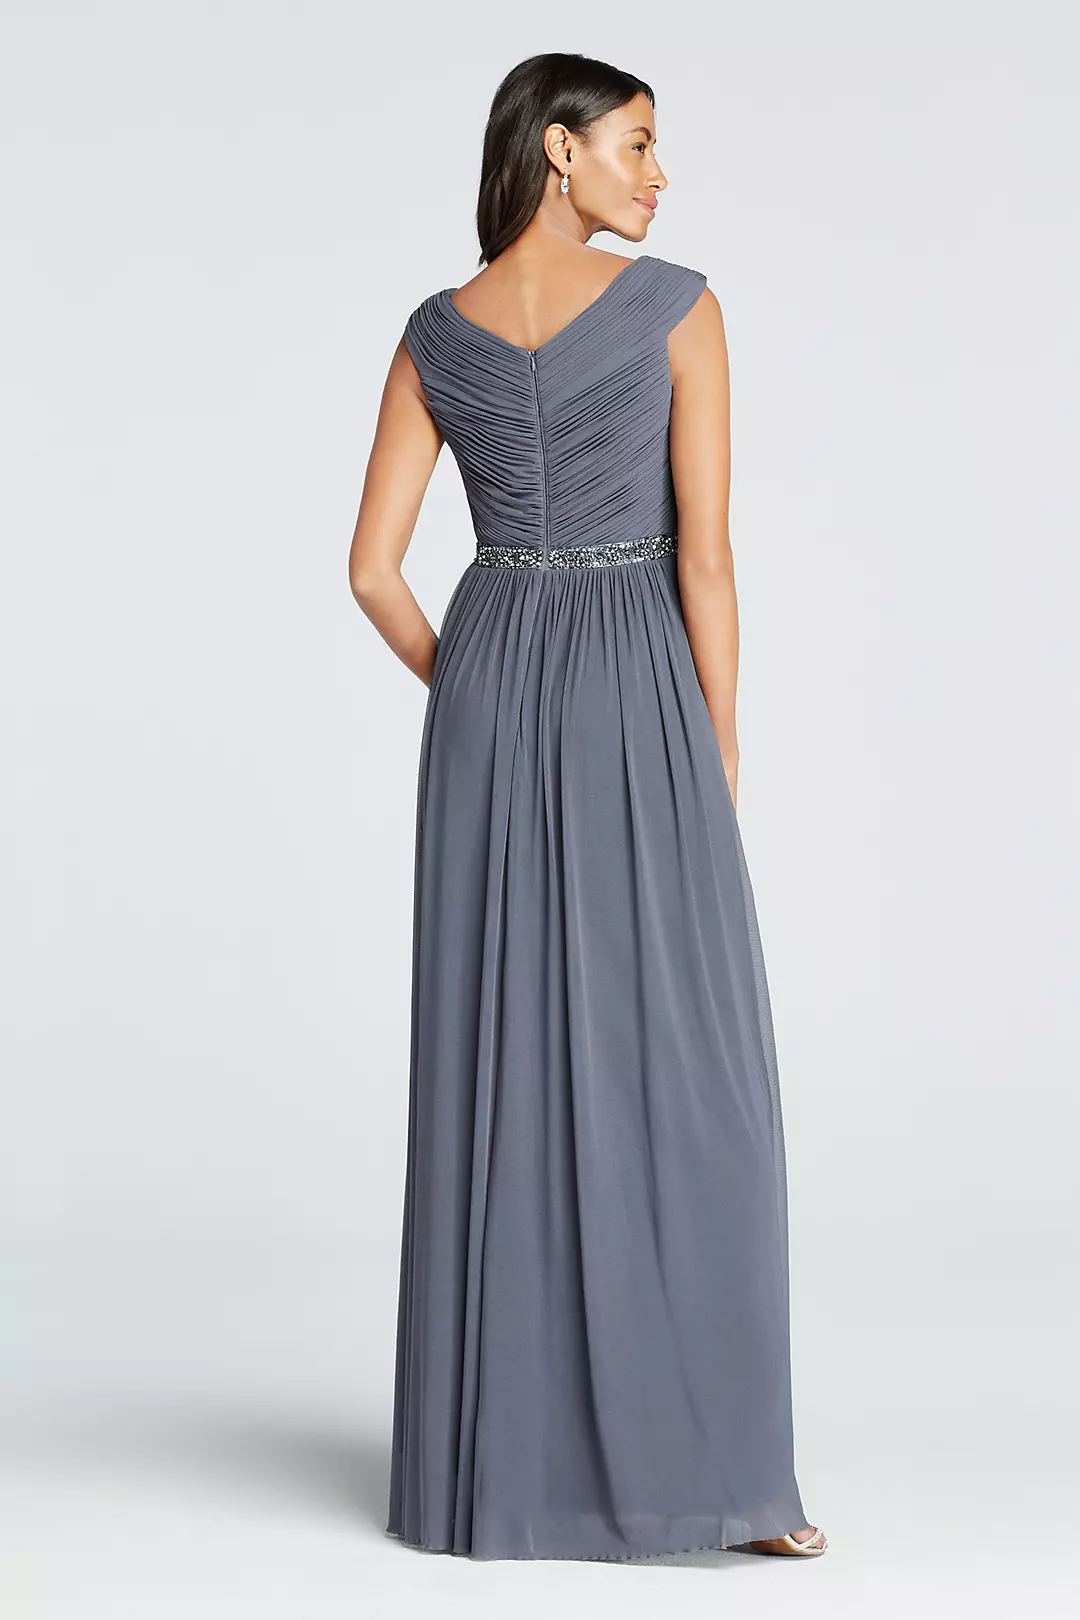 Cap Sleeve V-Neck Floor Length Dress Image 2